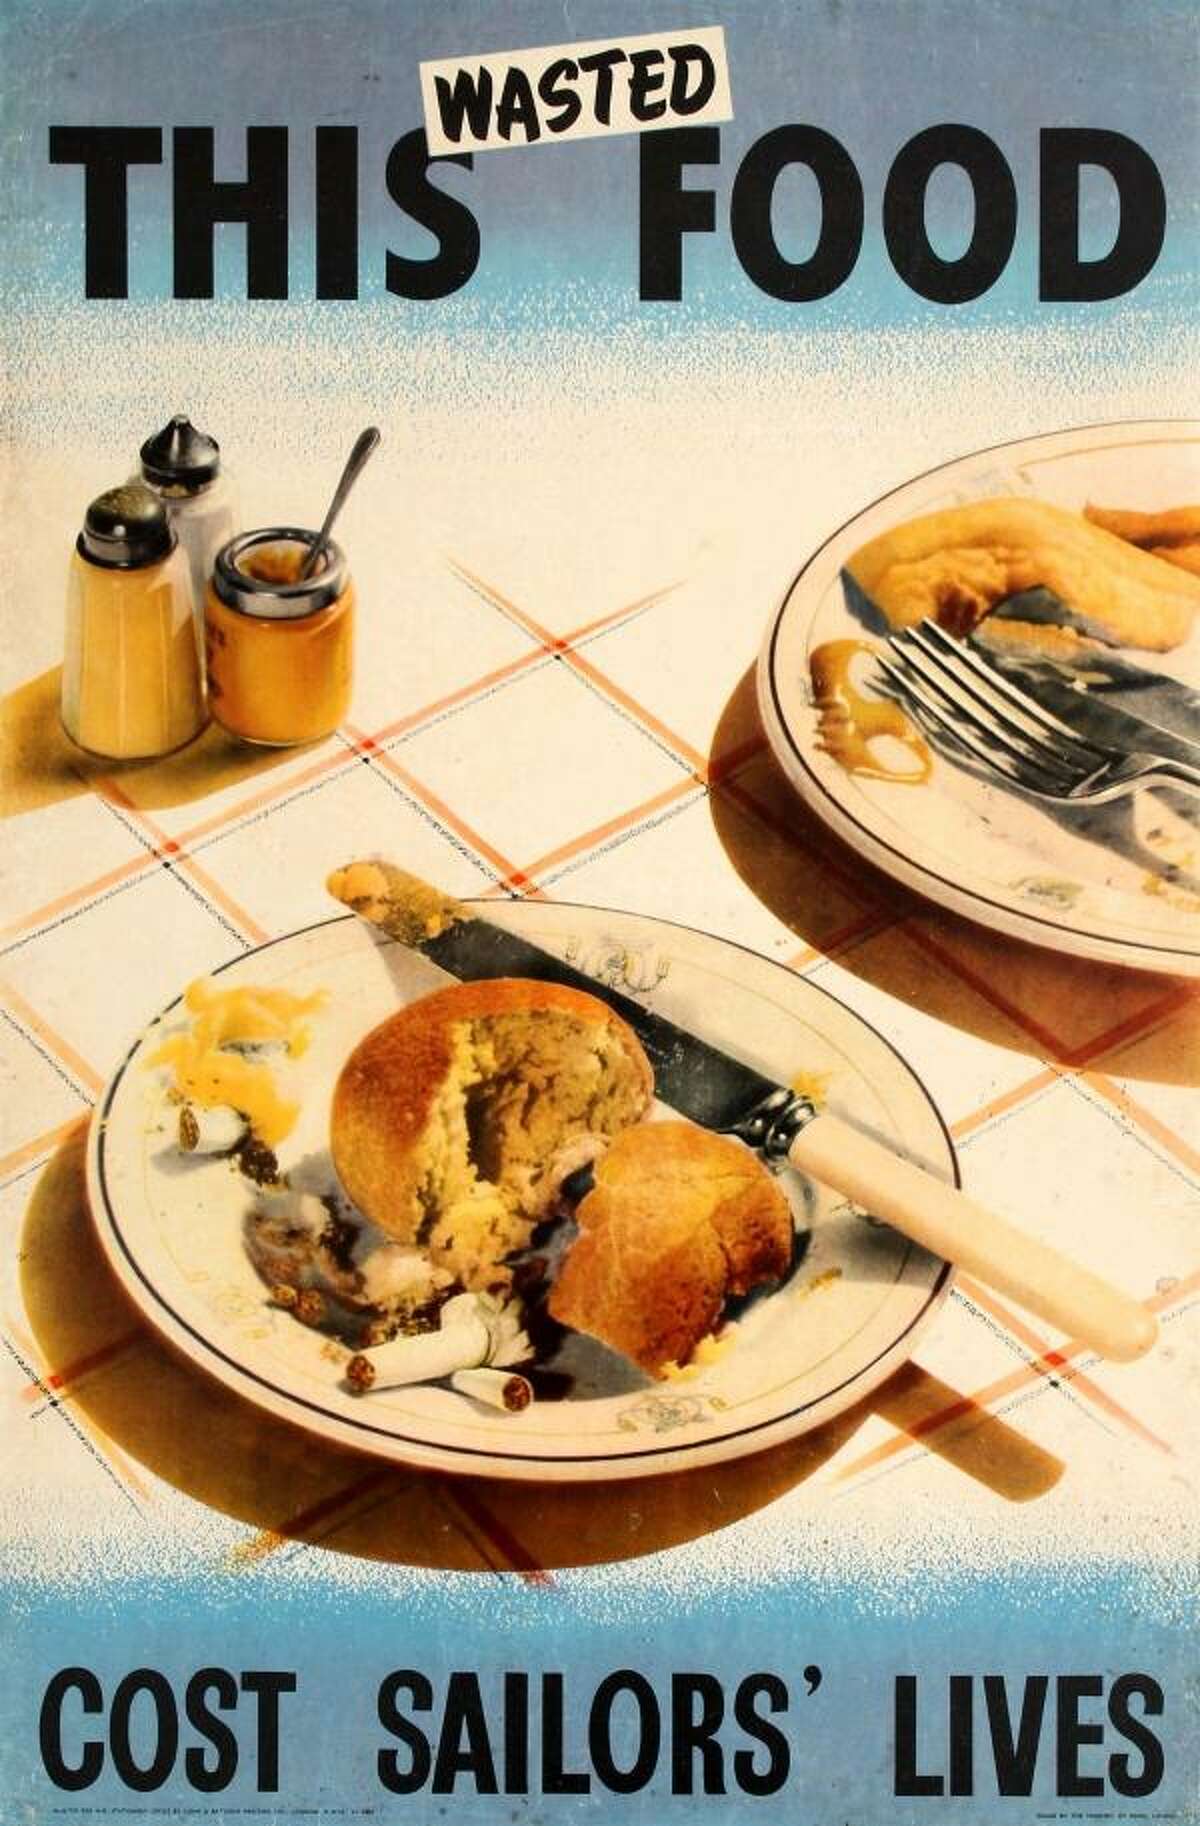 Vintage Food Propaganda Posters